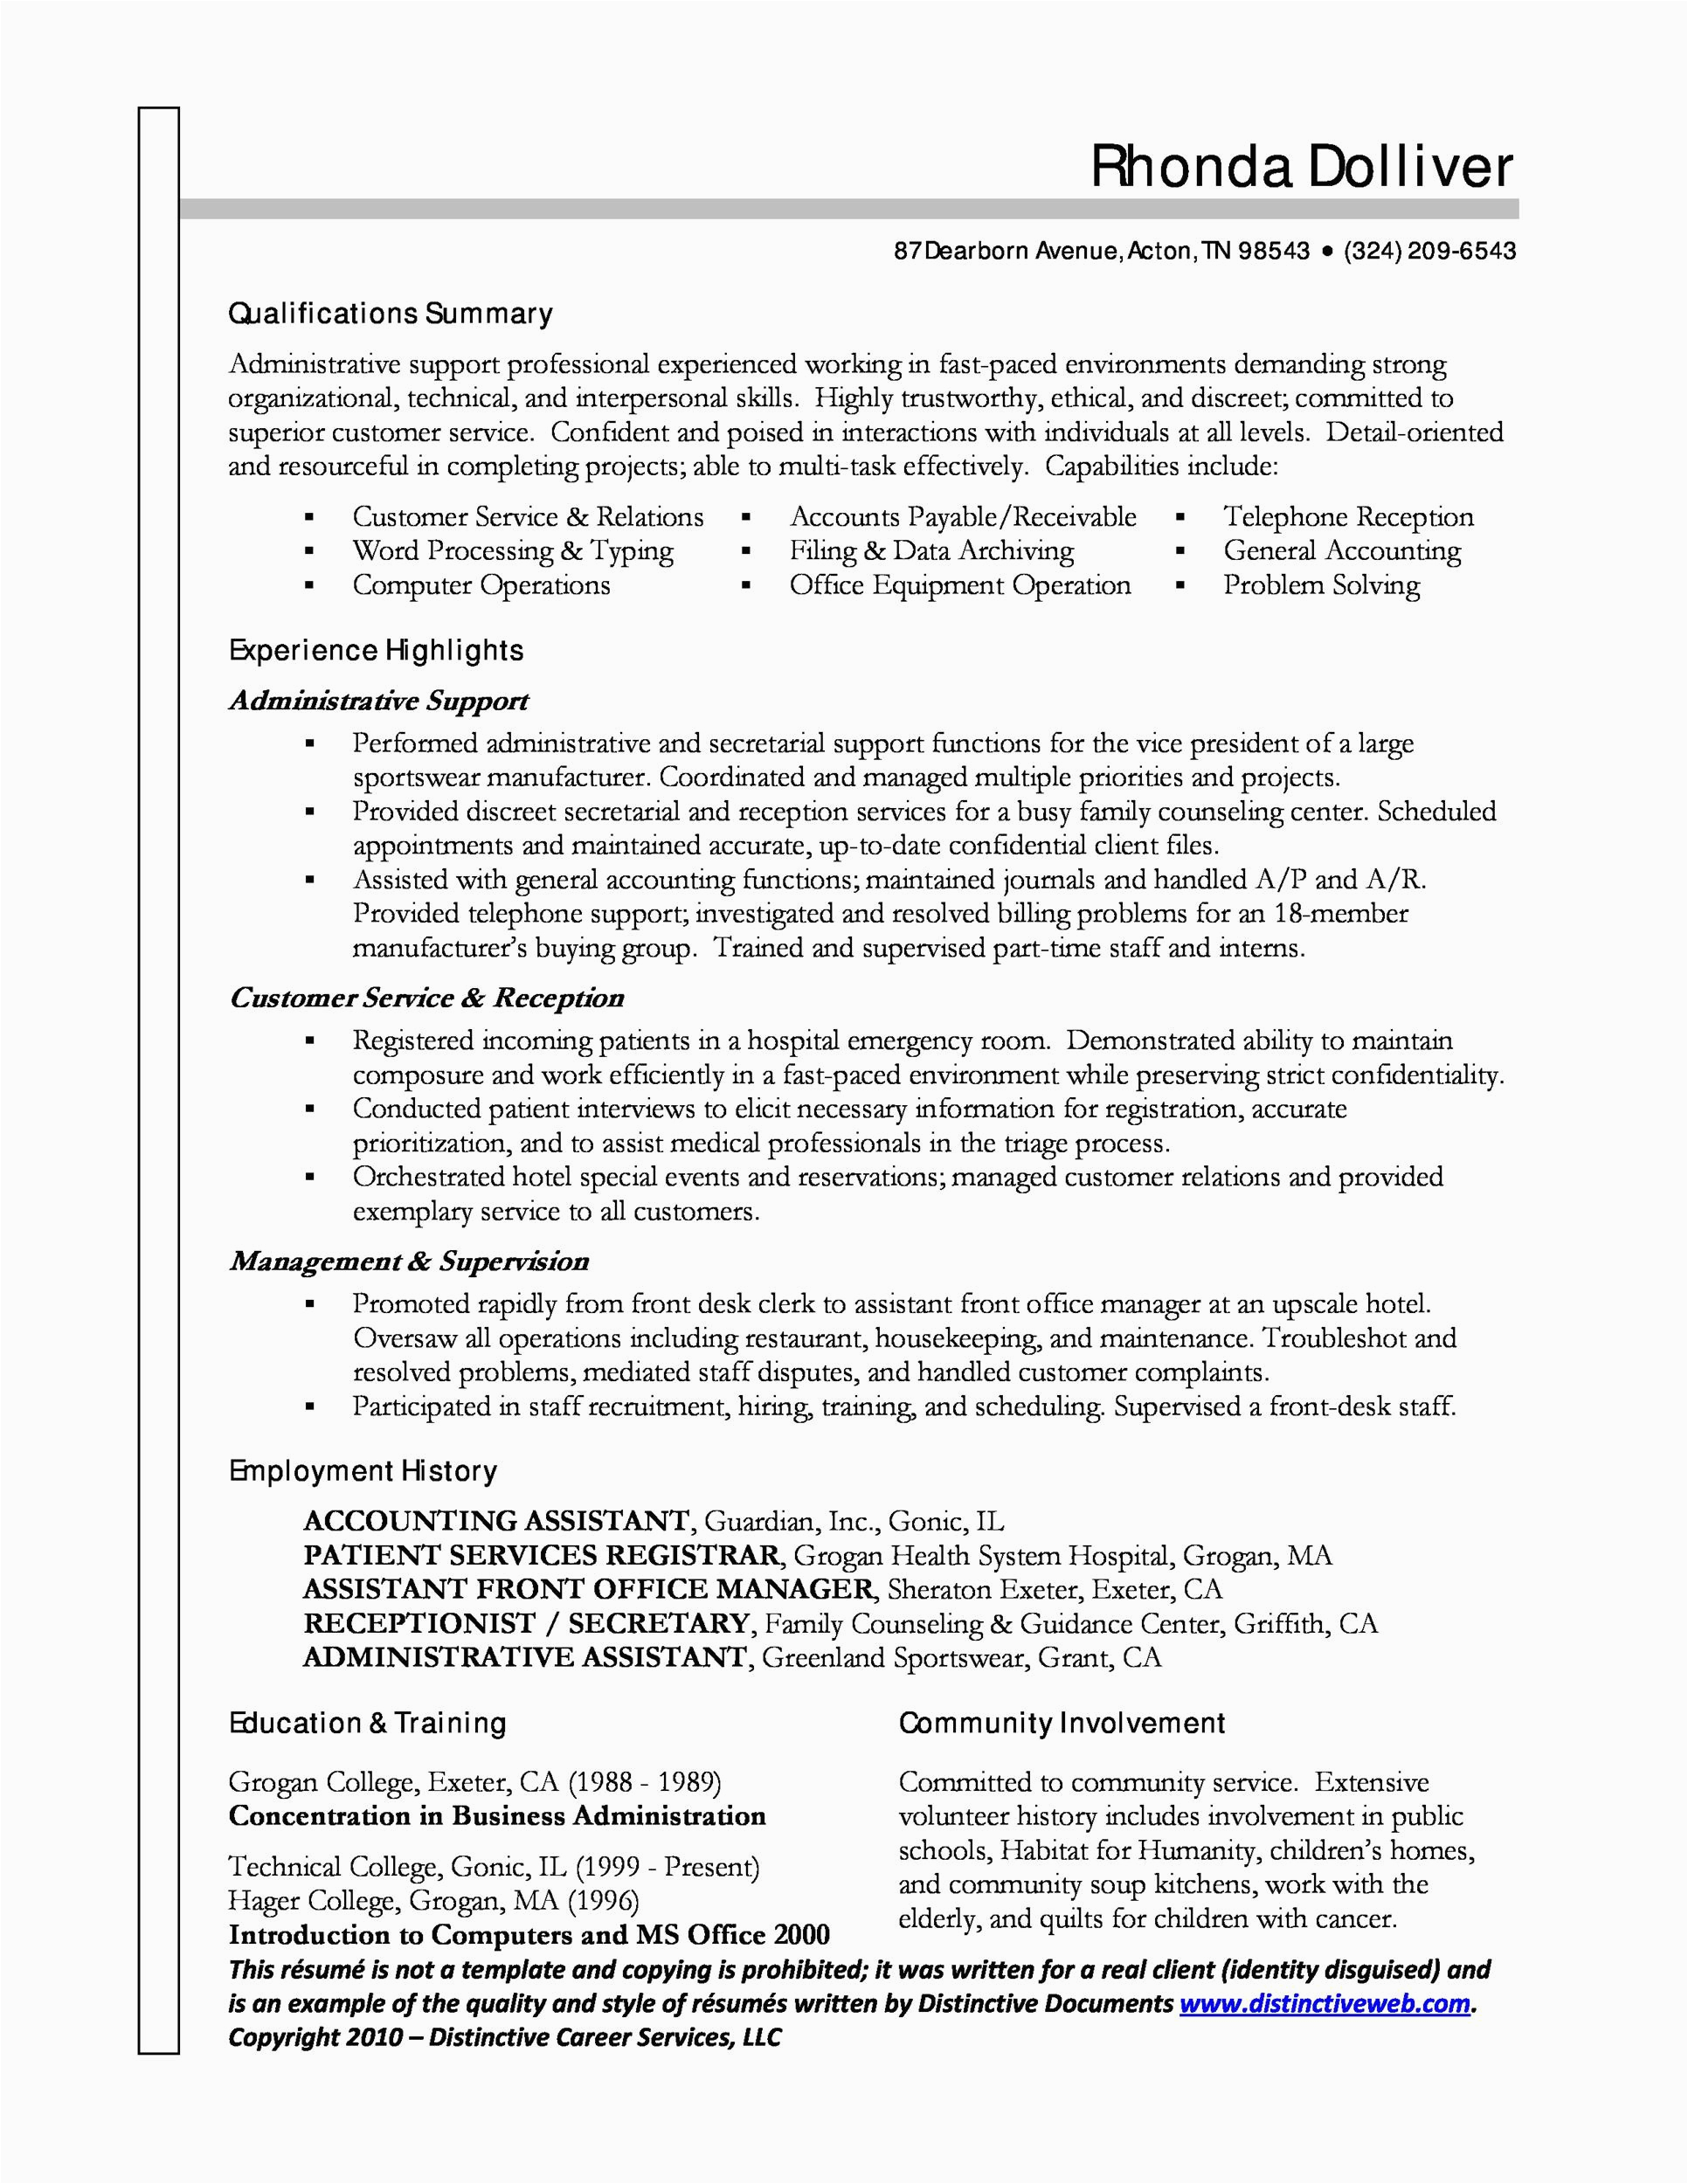 Sample Resume format for Administrative assistant 20 Free Administrative assistant Resume Samples Template Lab